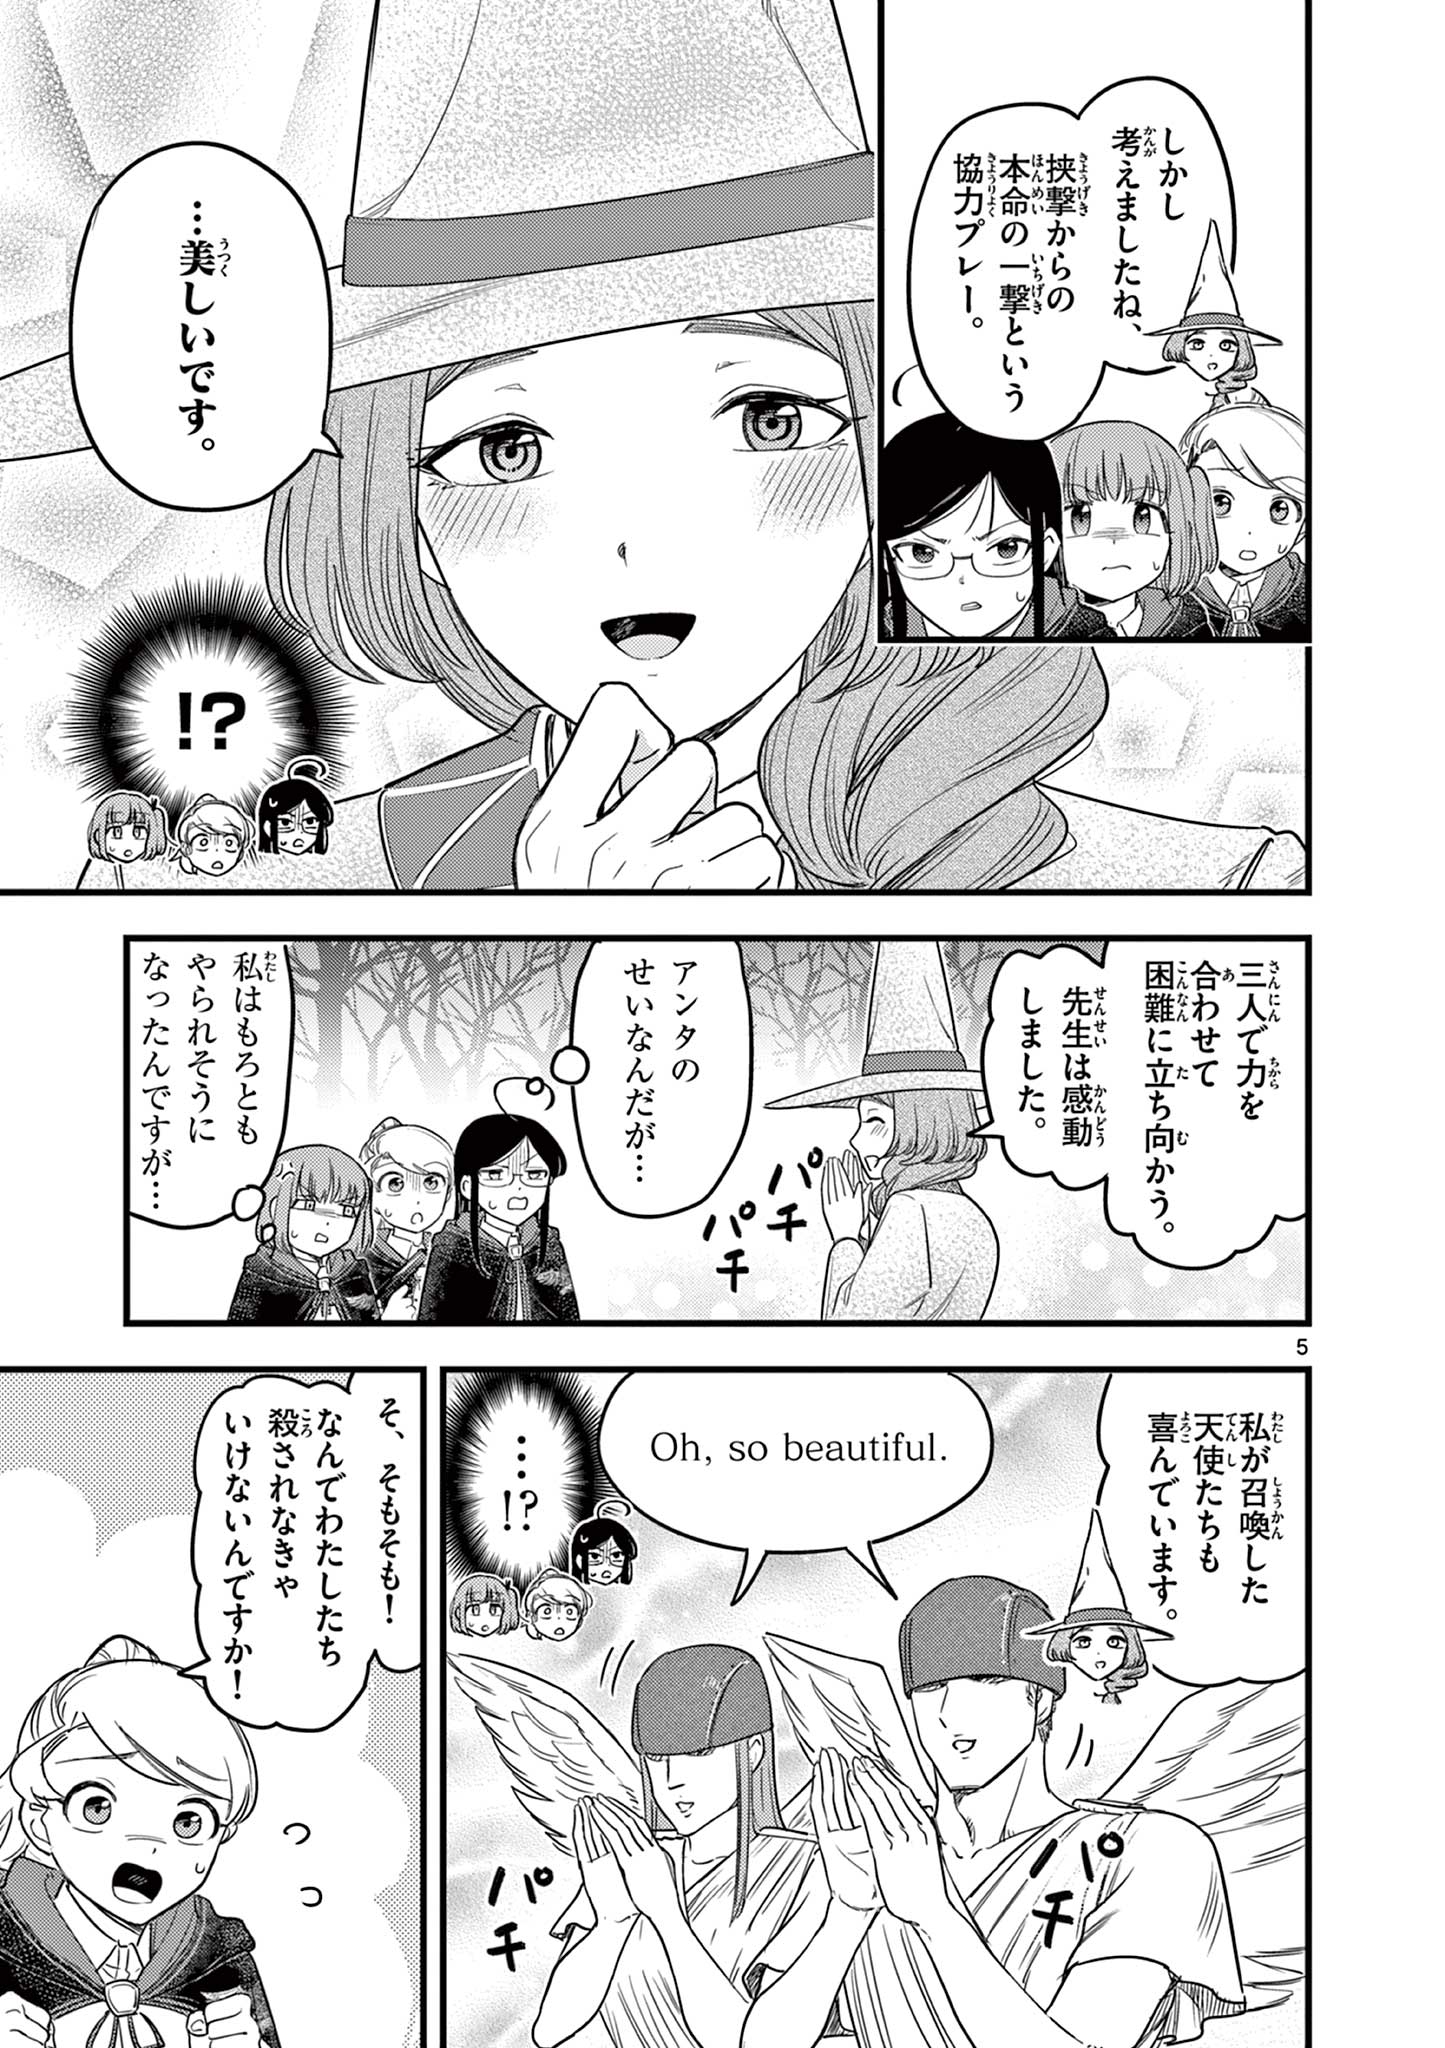 Kuro Mahou Ryou no Sanakunin - Chapter 8 - Page 5